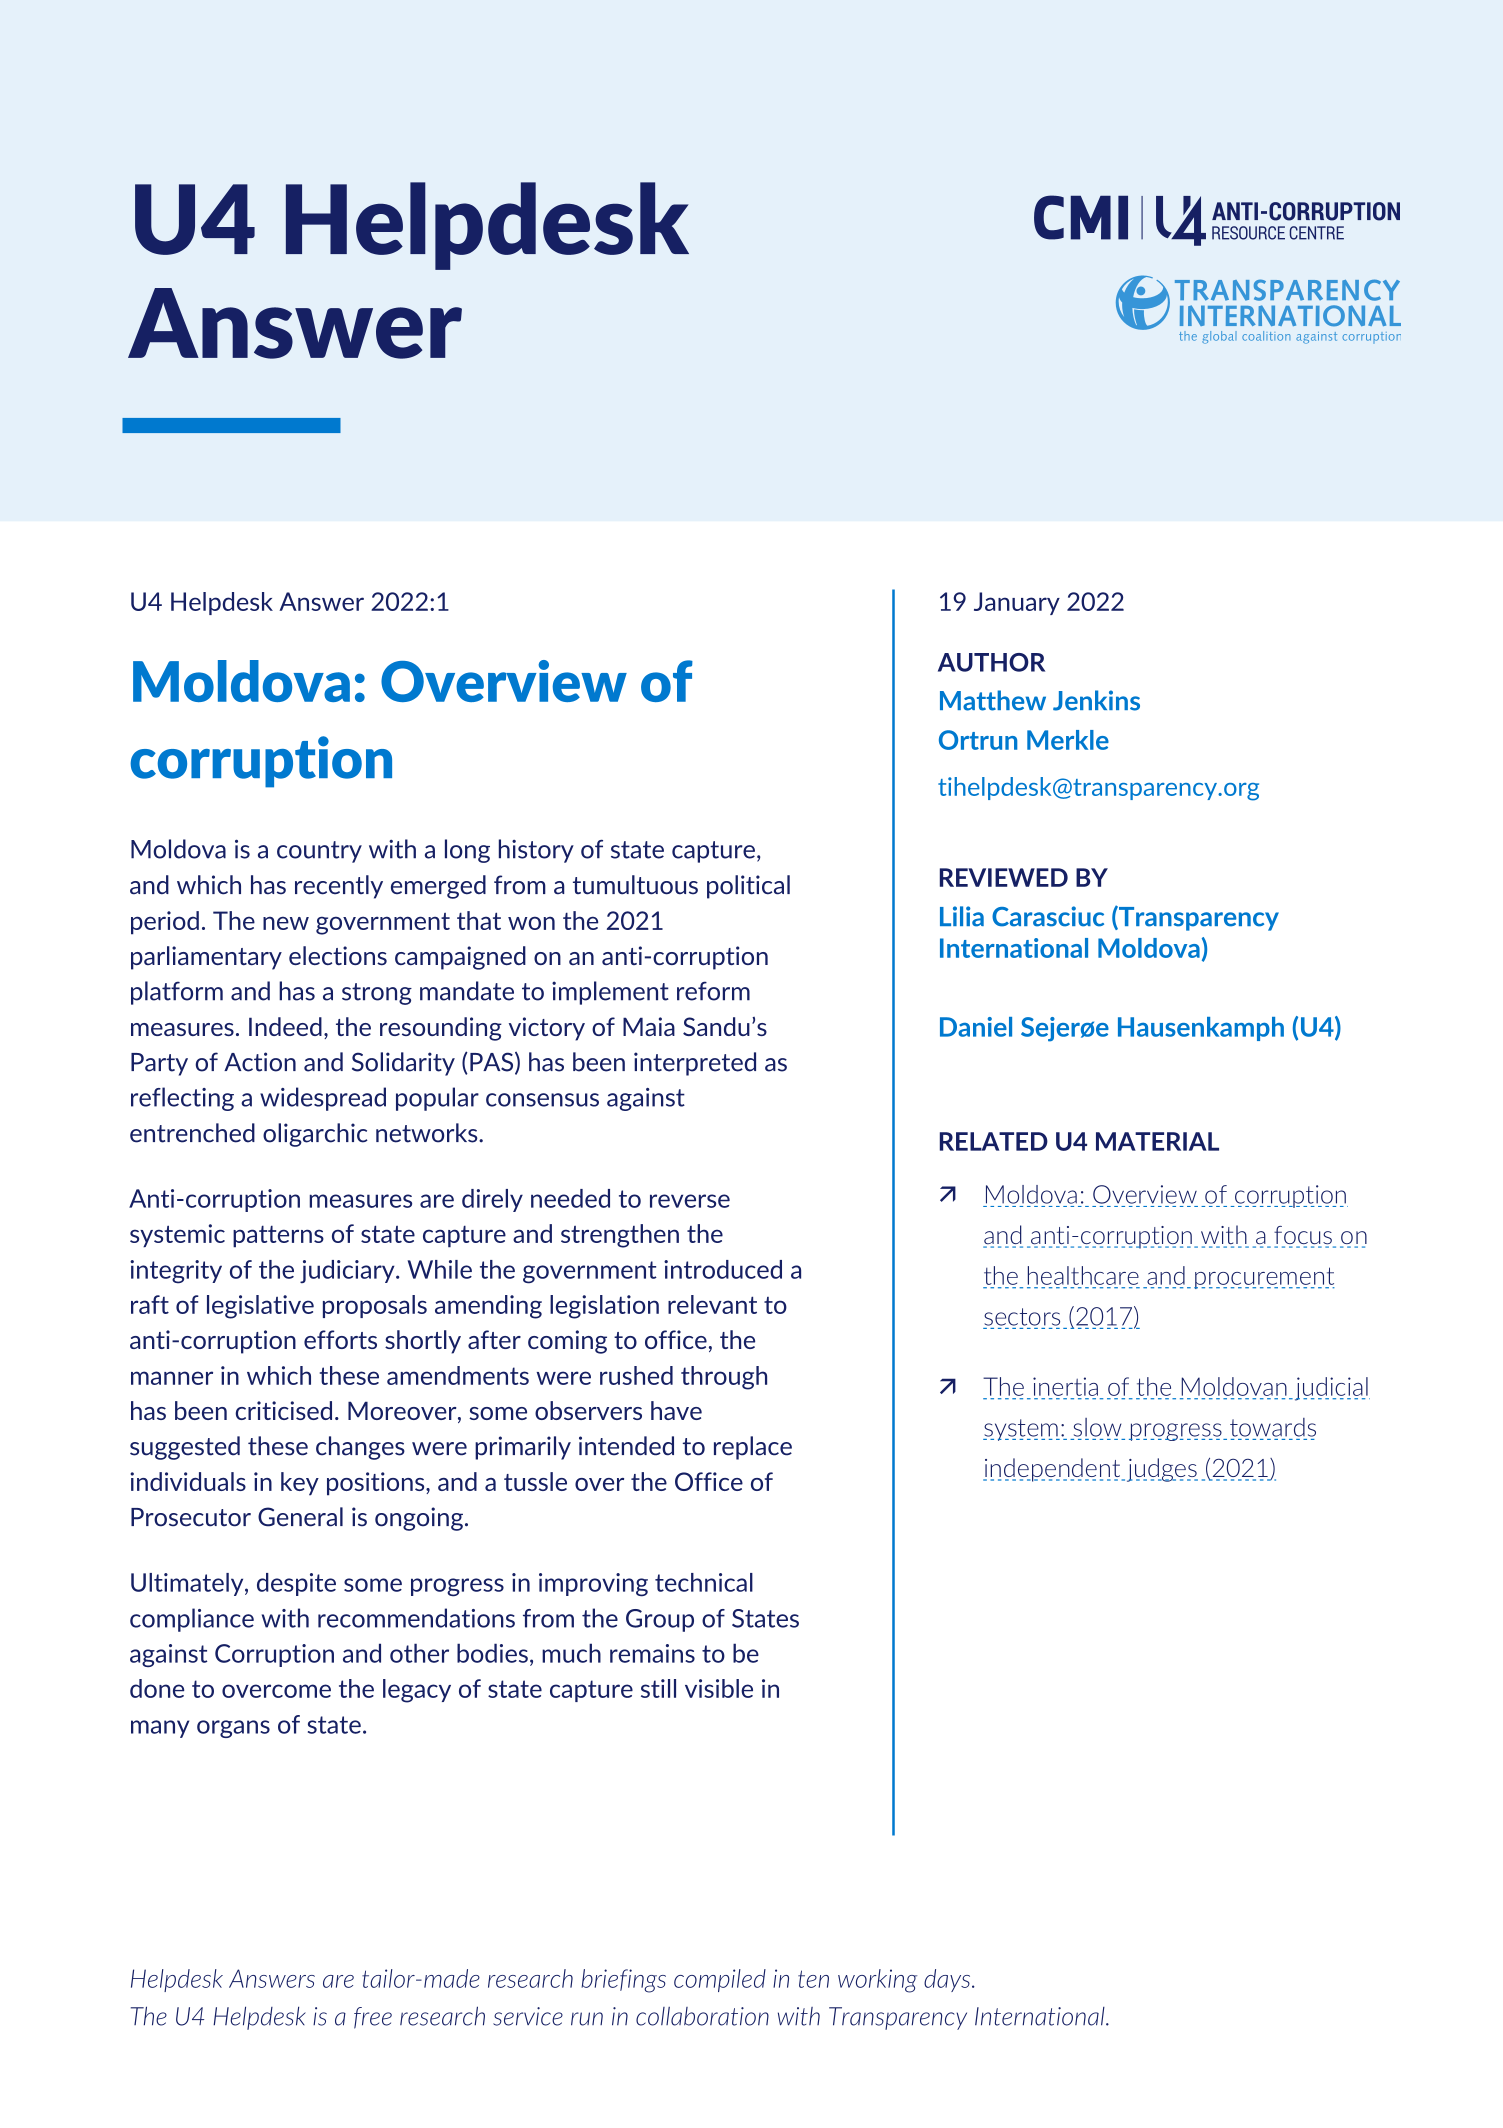 Moldova: Overview of corruption